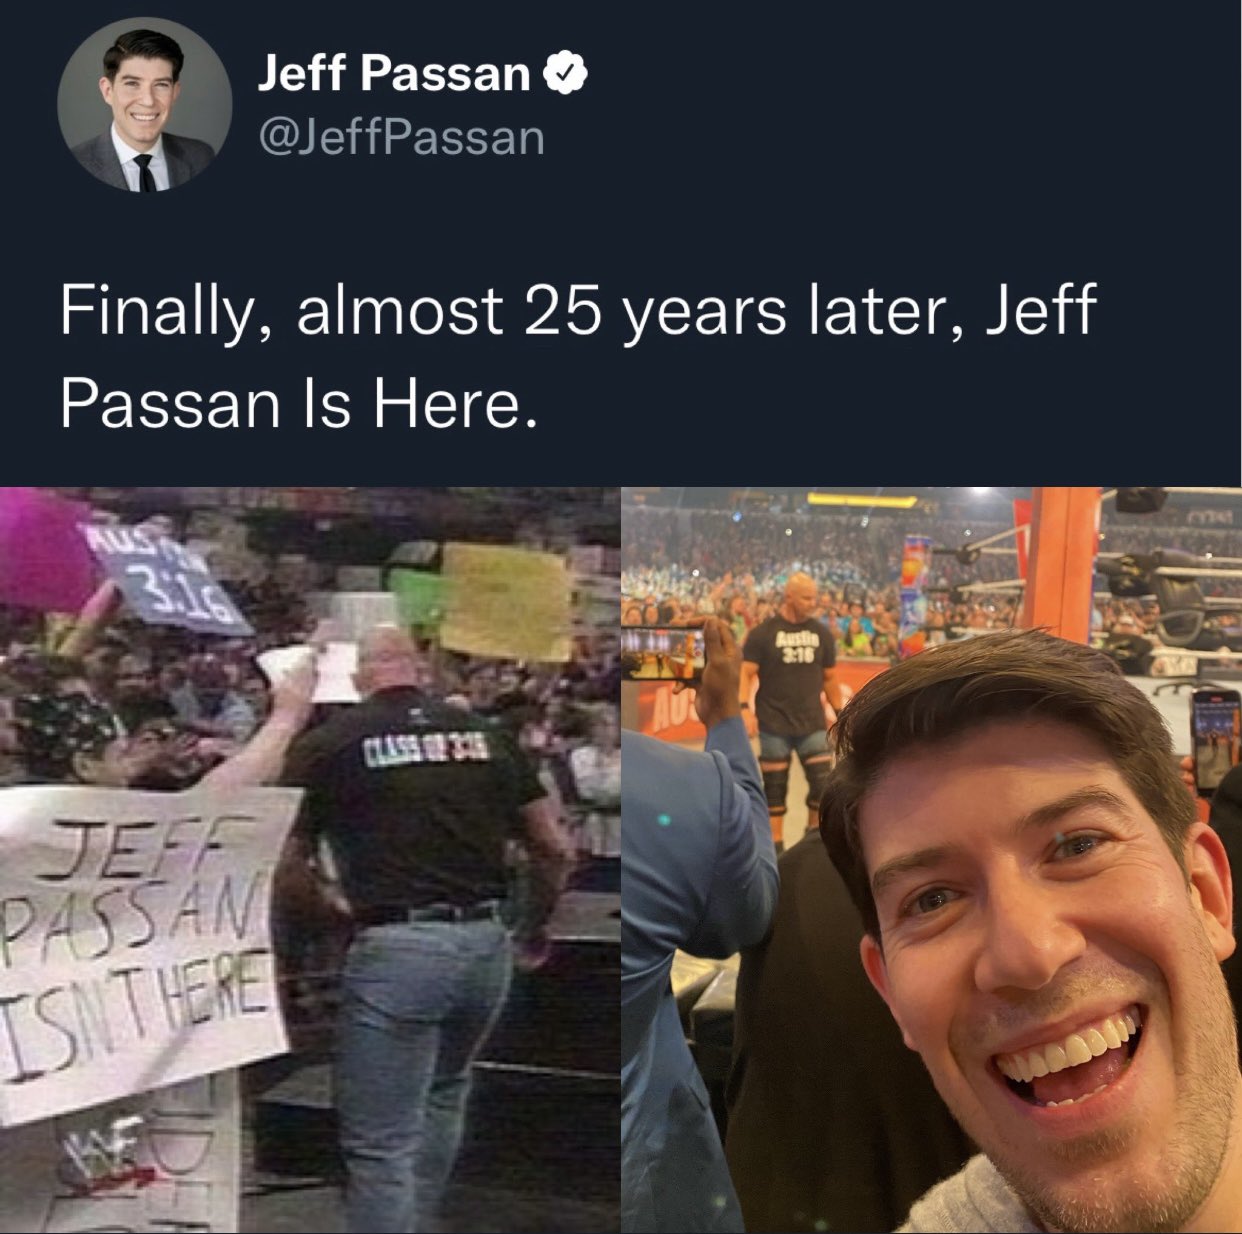 dudes posting wins - jeff passan wwe - Jeff Passan Finally, almost 25 years later, Jeff Passan Is Here. Austi 315 Jeff Passan Ish There